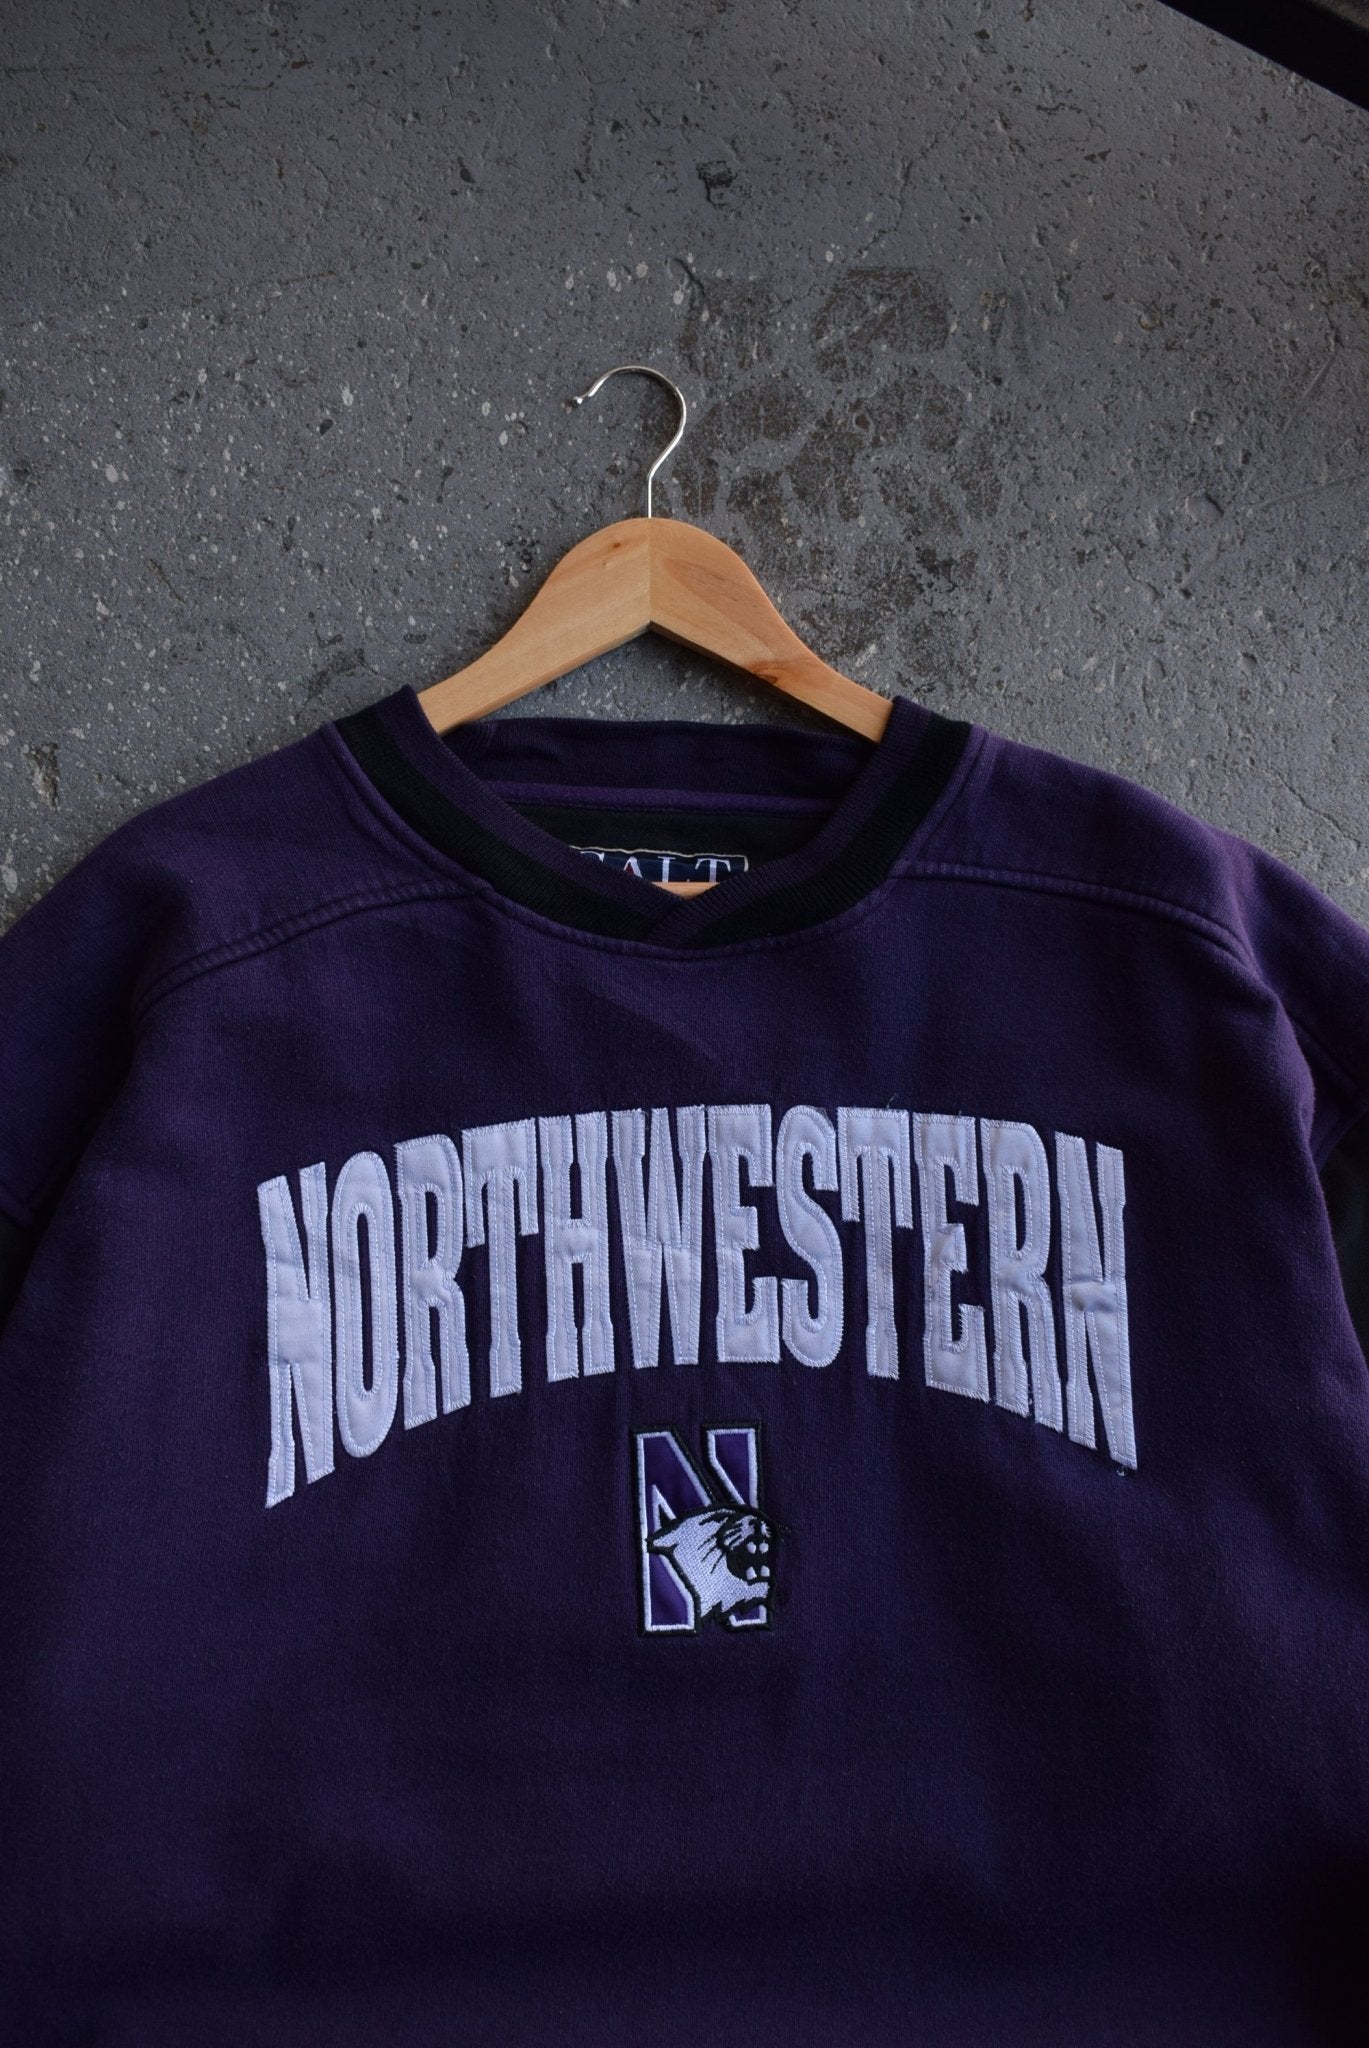 Vintage 90s Northwestern University Wildcats Crewnecks (XL) - Retrospective Store